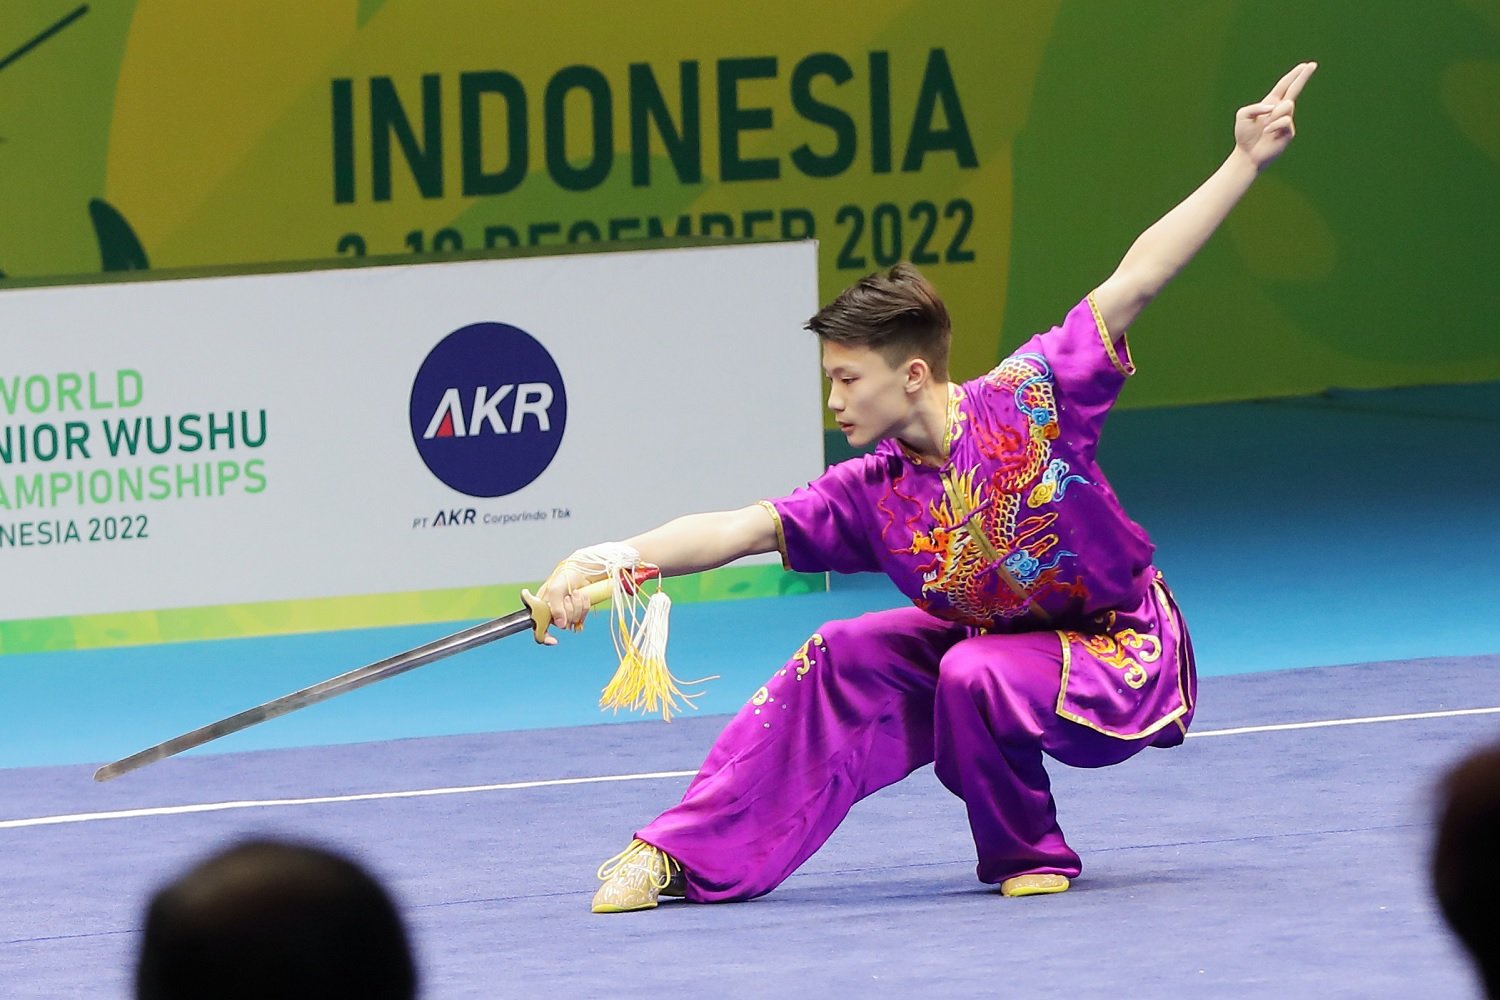 world-junior-wushu-championships-indonesia-tangerang-2022-wayland-li-077.JPG